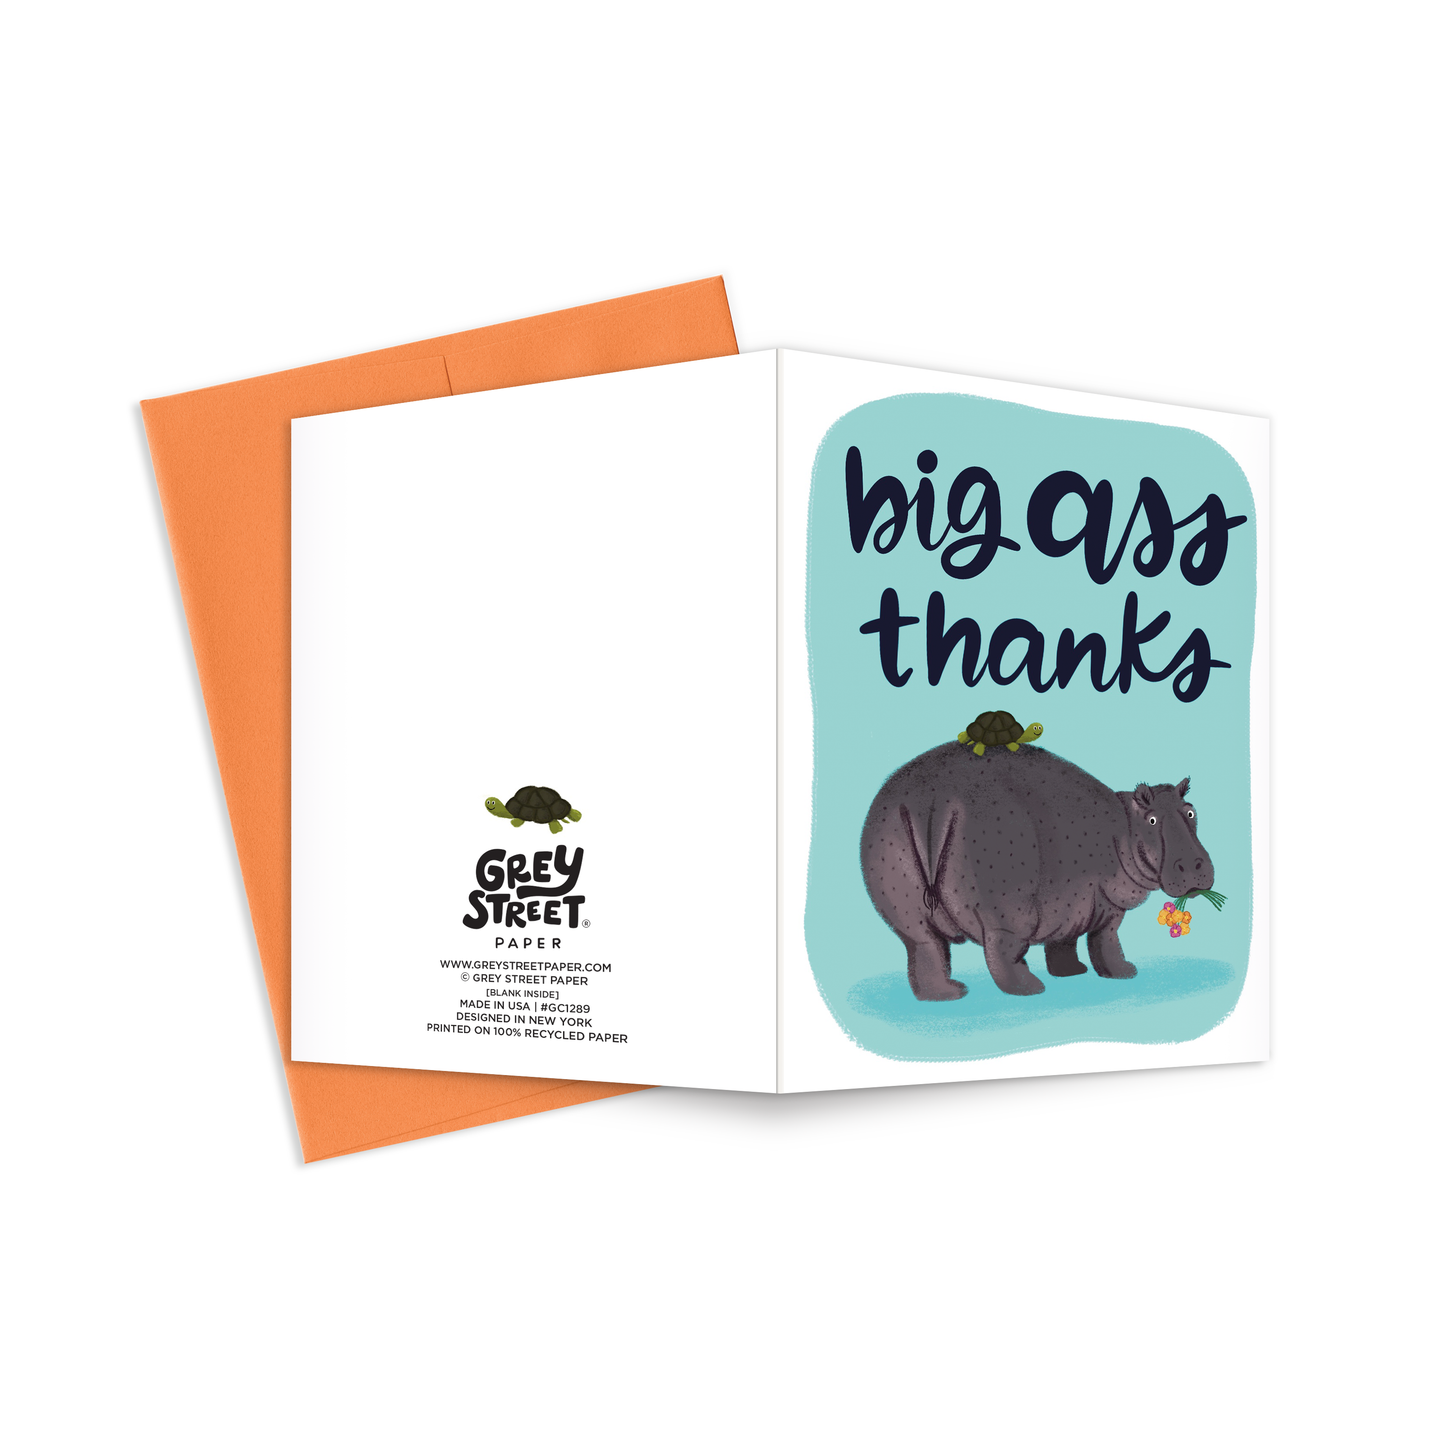 Big Ass Thanks Greeting Card